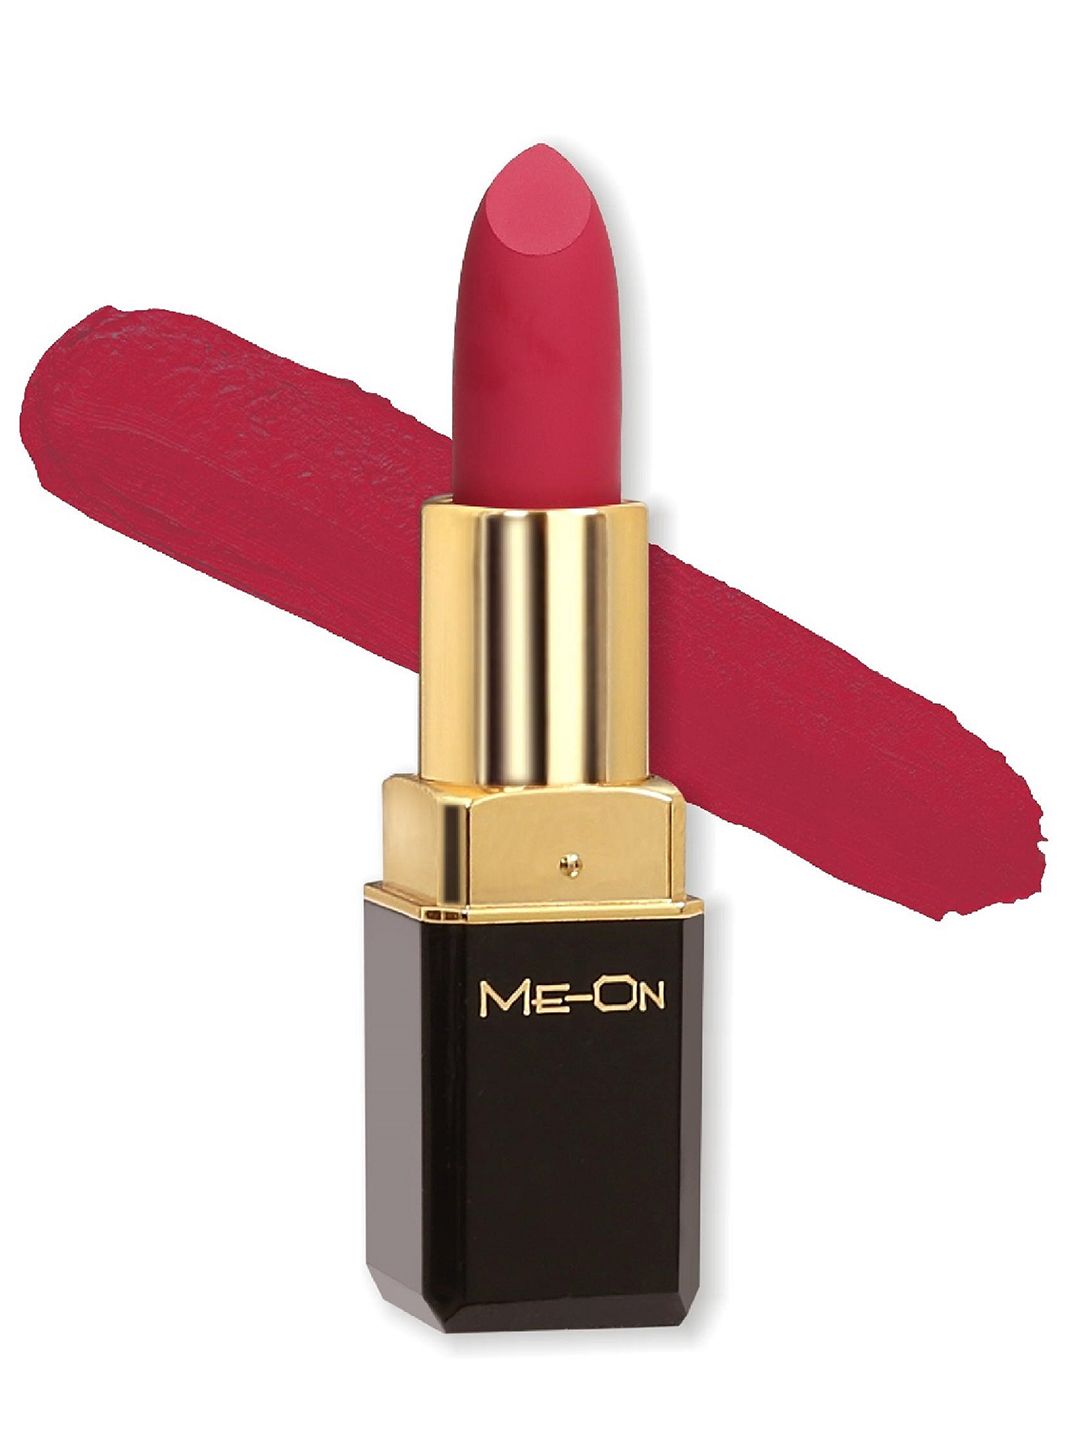 ME-ON Color Addict Matte Lipstick - Rosy 07 Price in India